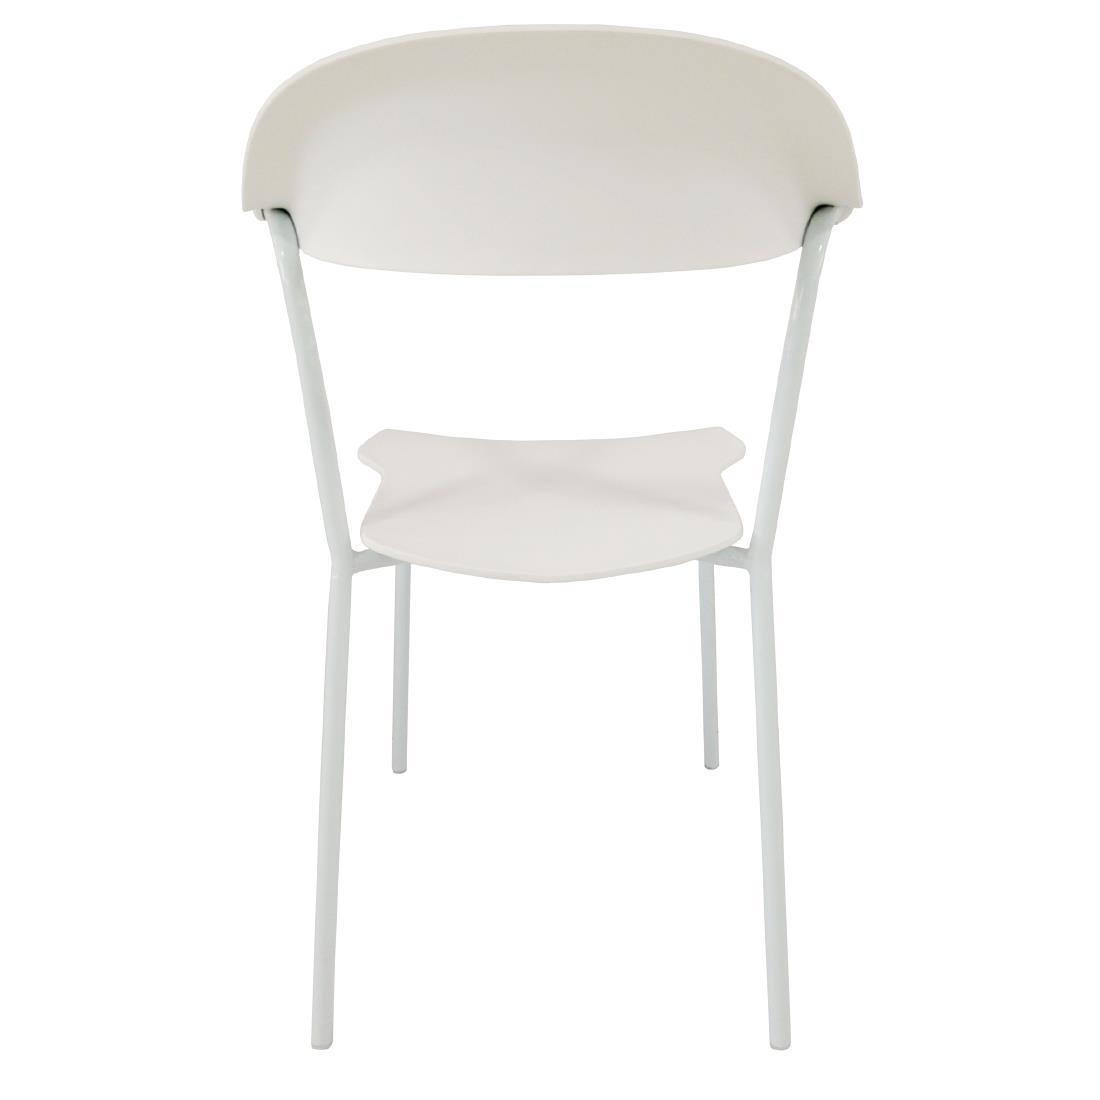 Bolero PP Wishbone Chair White (Pack of 4) - GR337  - 3